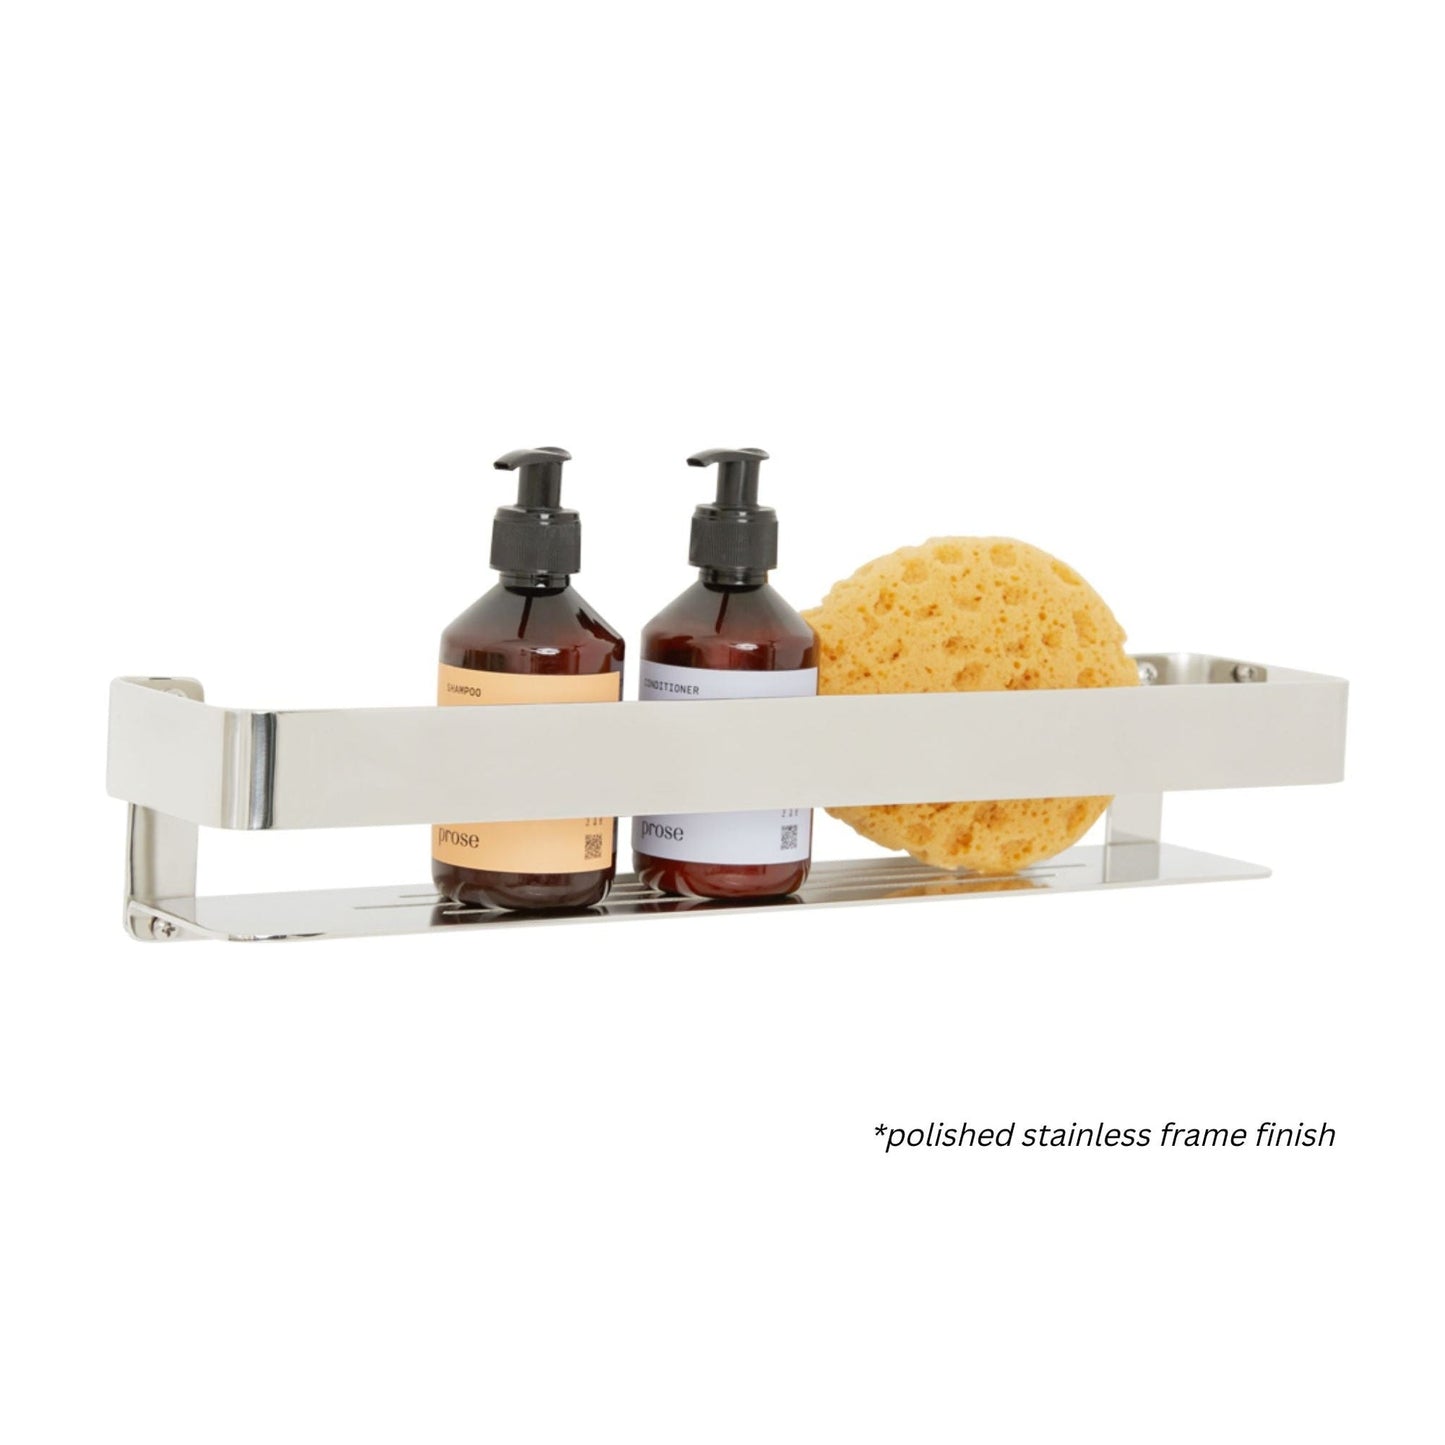 Seachrome Coronado 700 Series 18" x 4" Rectangular Shower Shelf With Rail in Biscuit Powder Coated Stainless Steel Finish